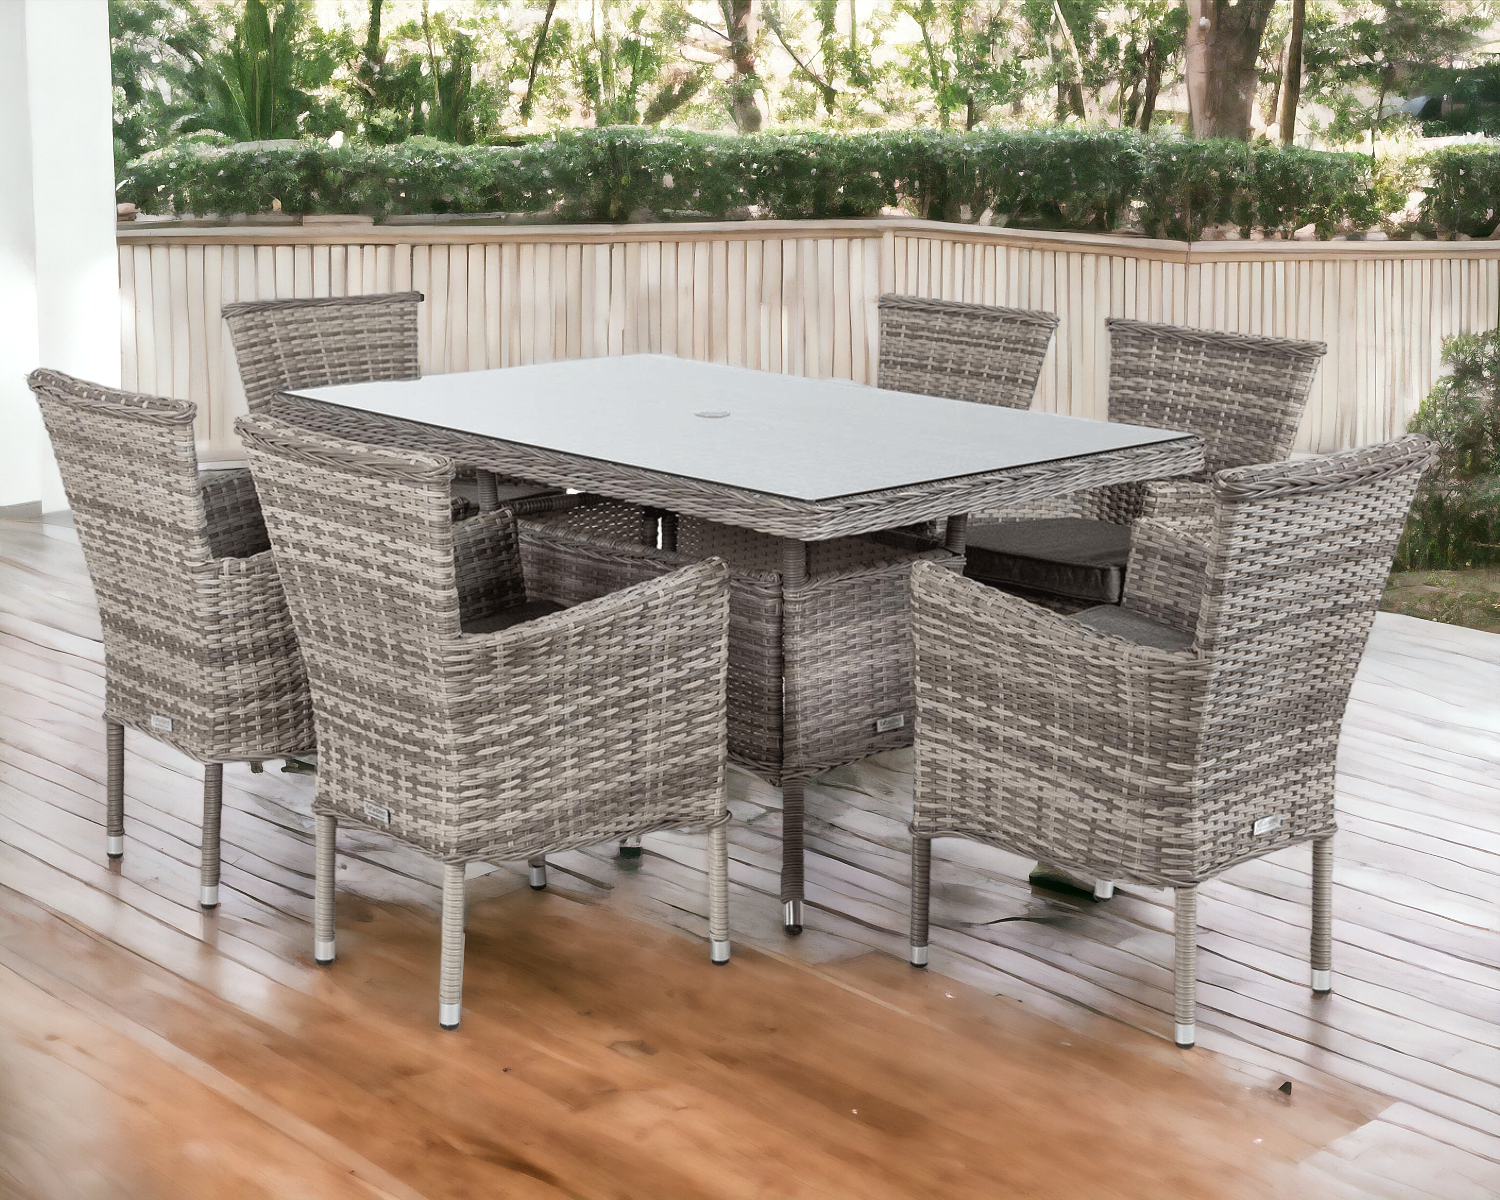 6 Rattan Chairs Small Rectangular Garden Dining Table Set In Grey Cambridge Rattan Direct